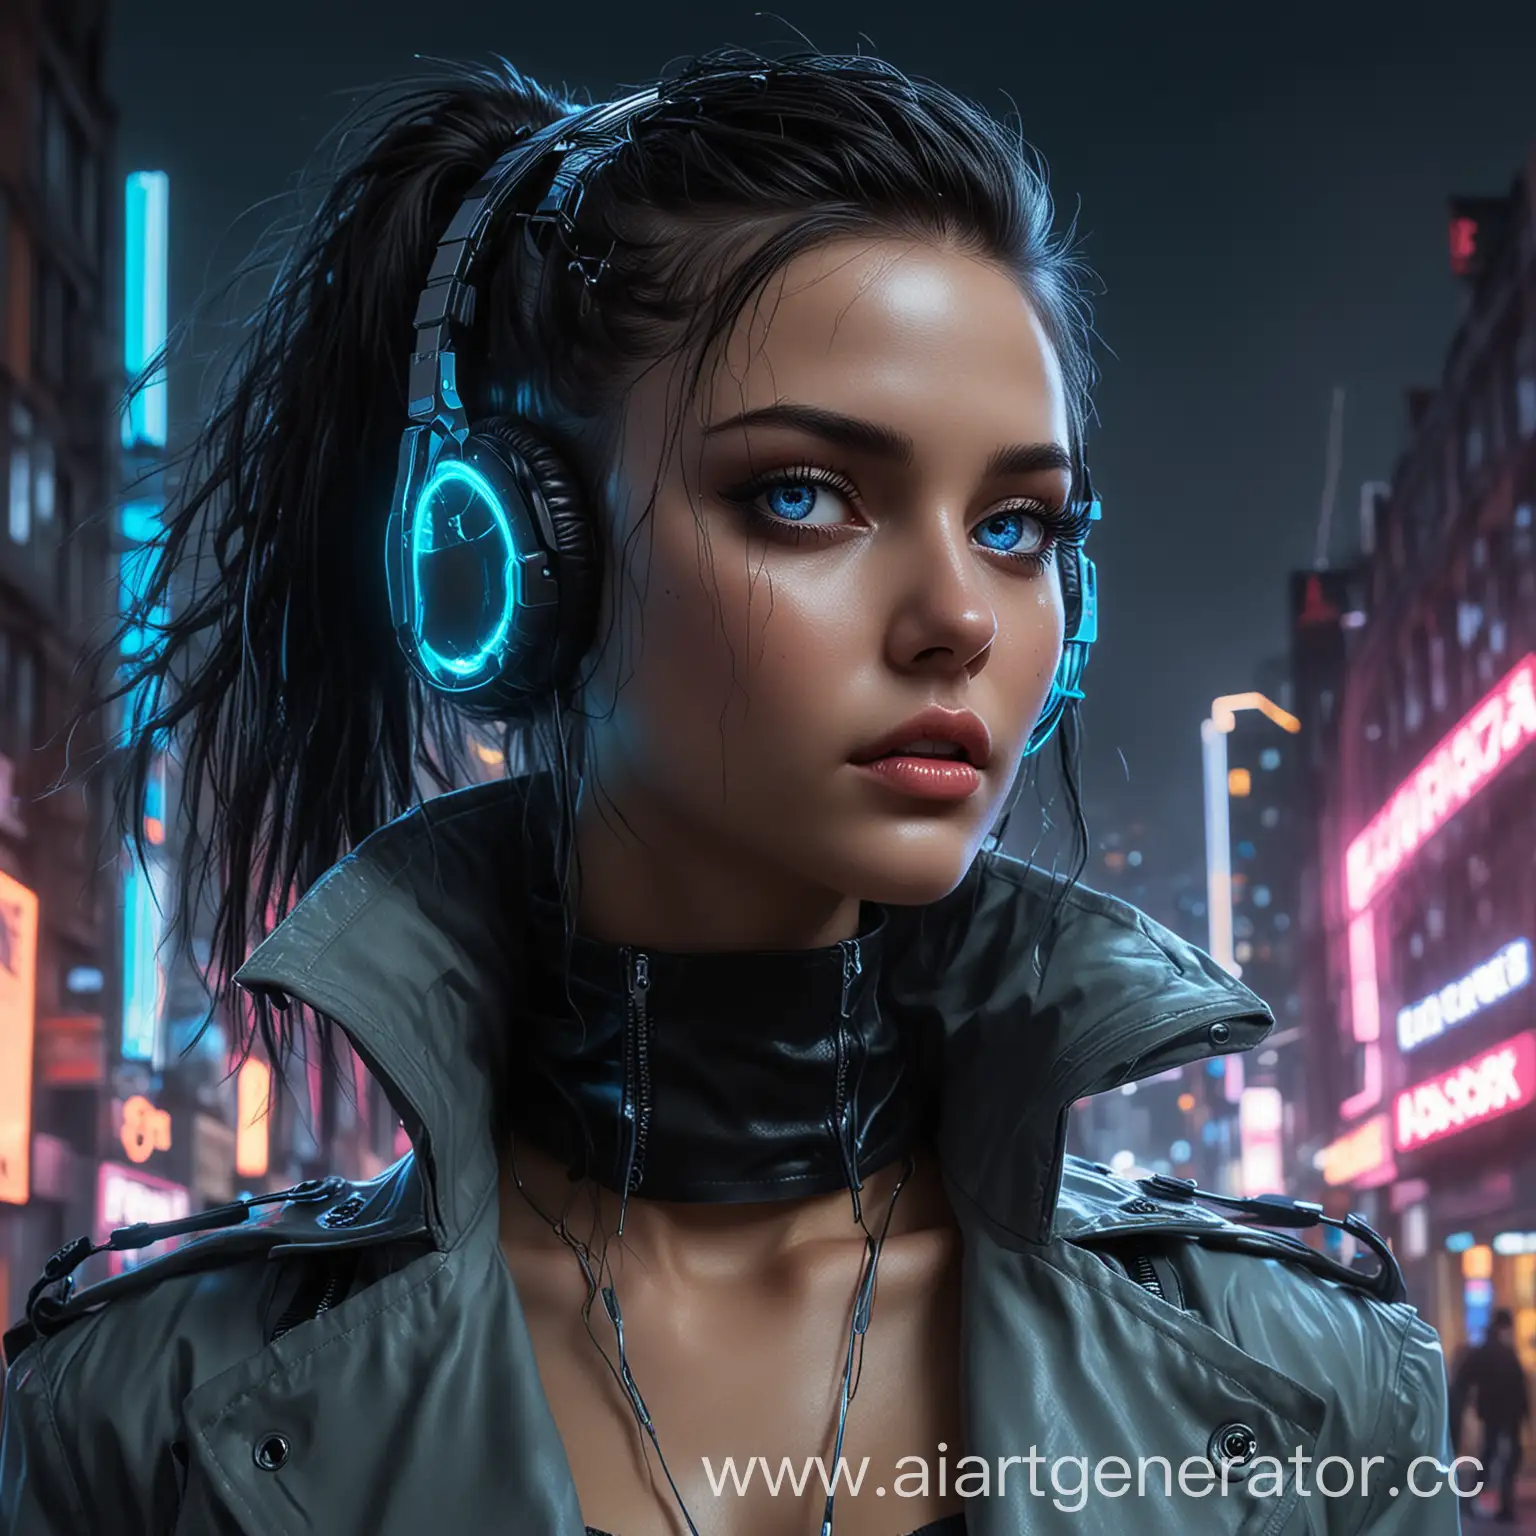 Cyberpunk-Girl-with-Neon-Headphones-and-Cyberimplants-in-Night-City